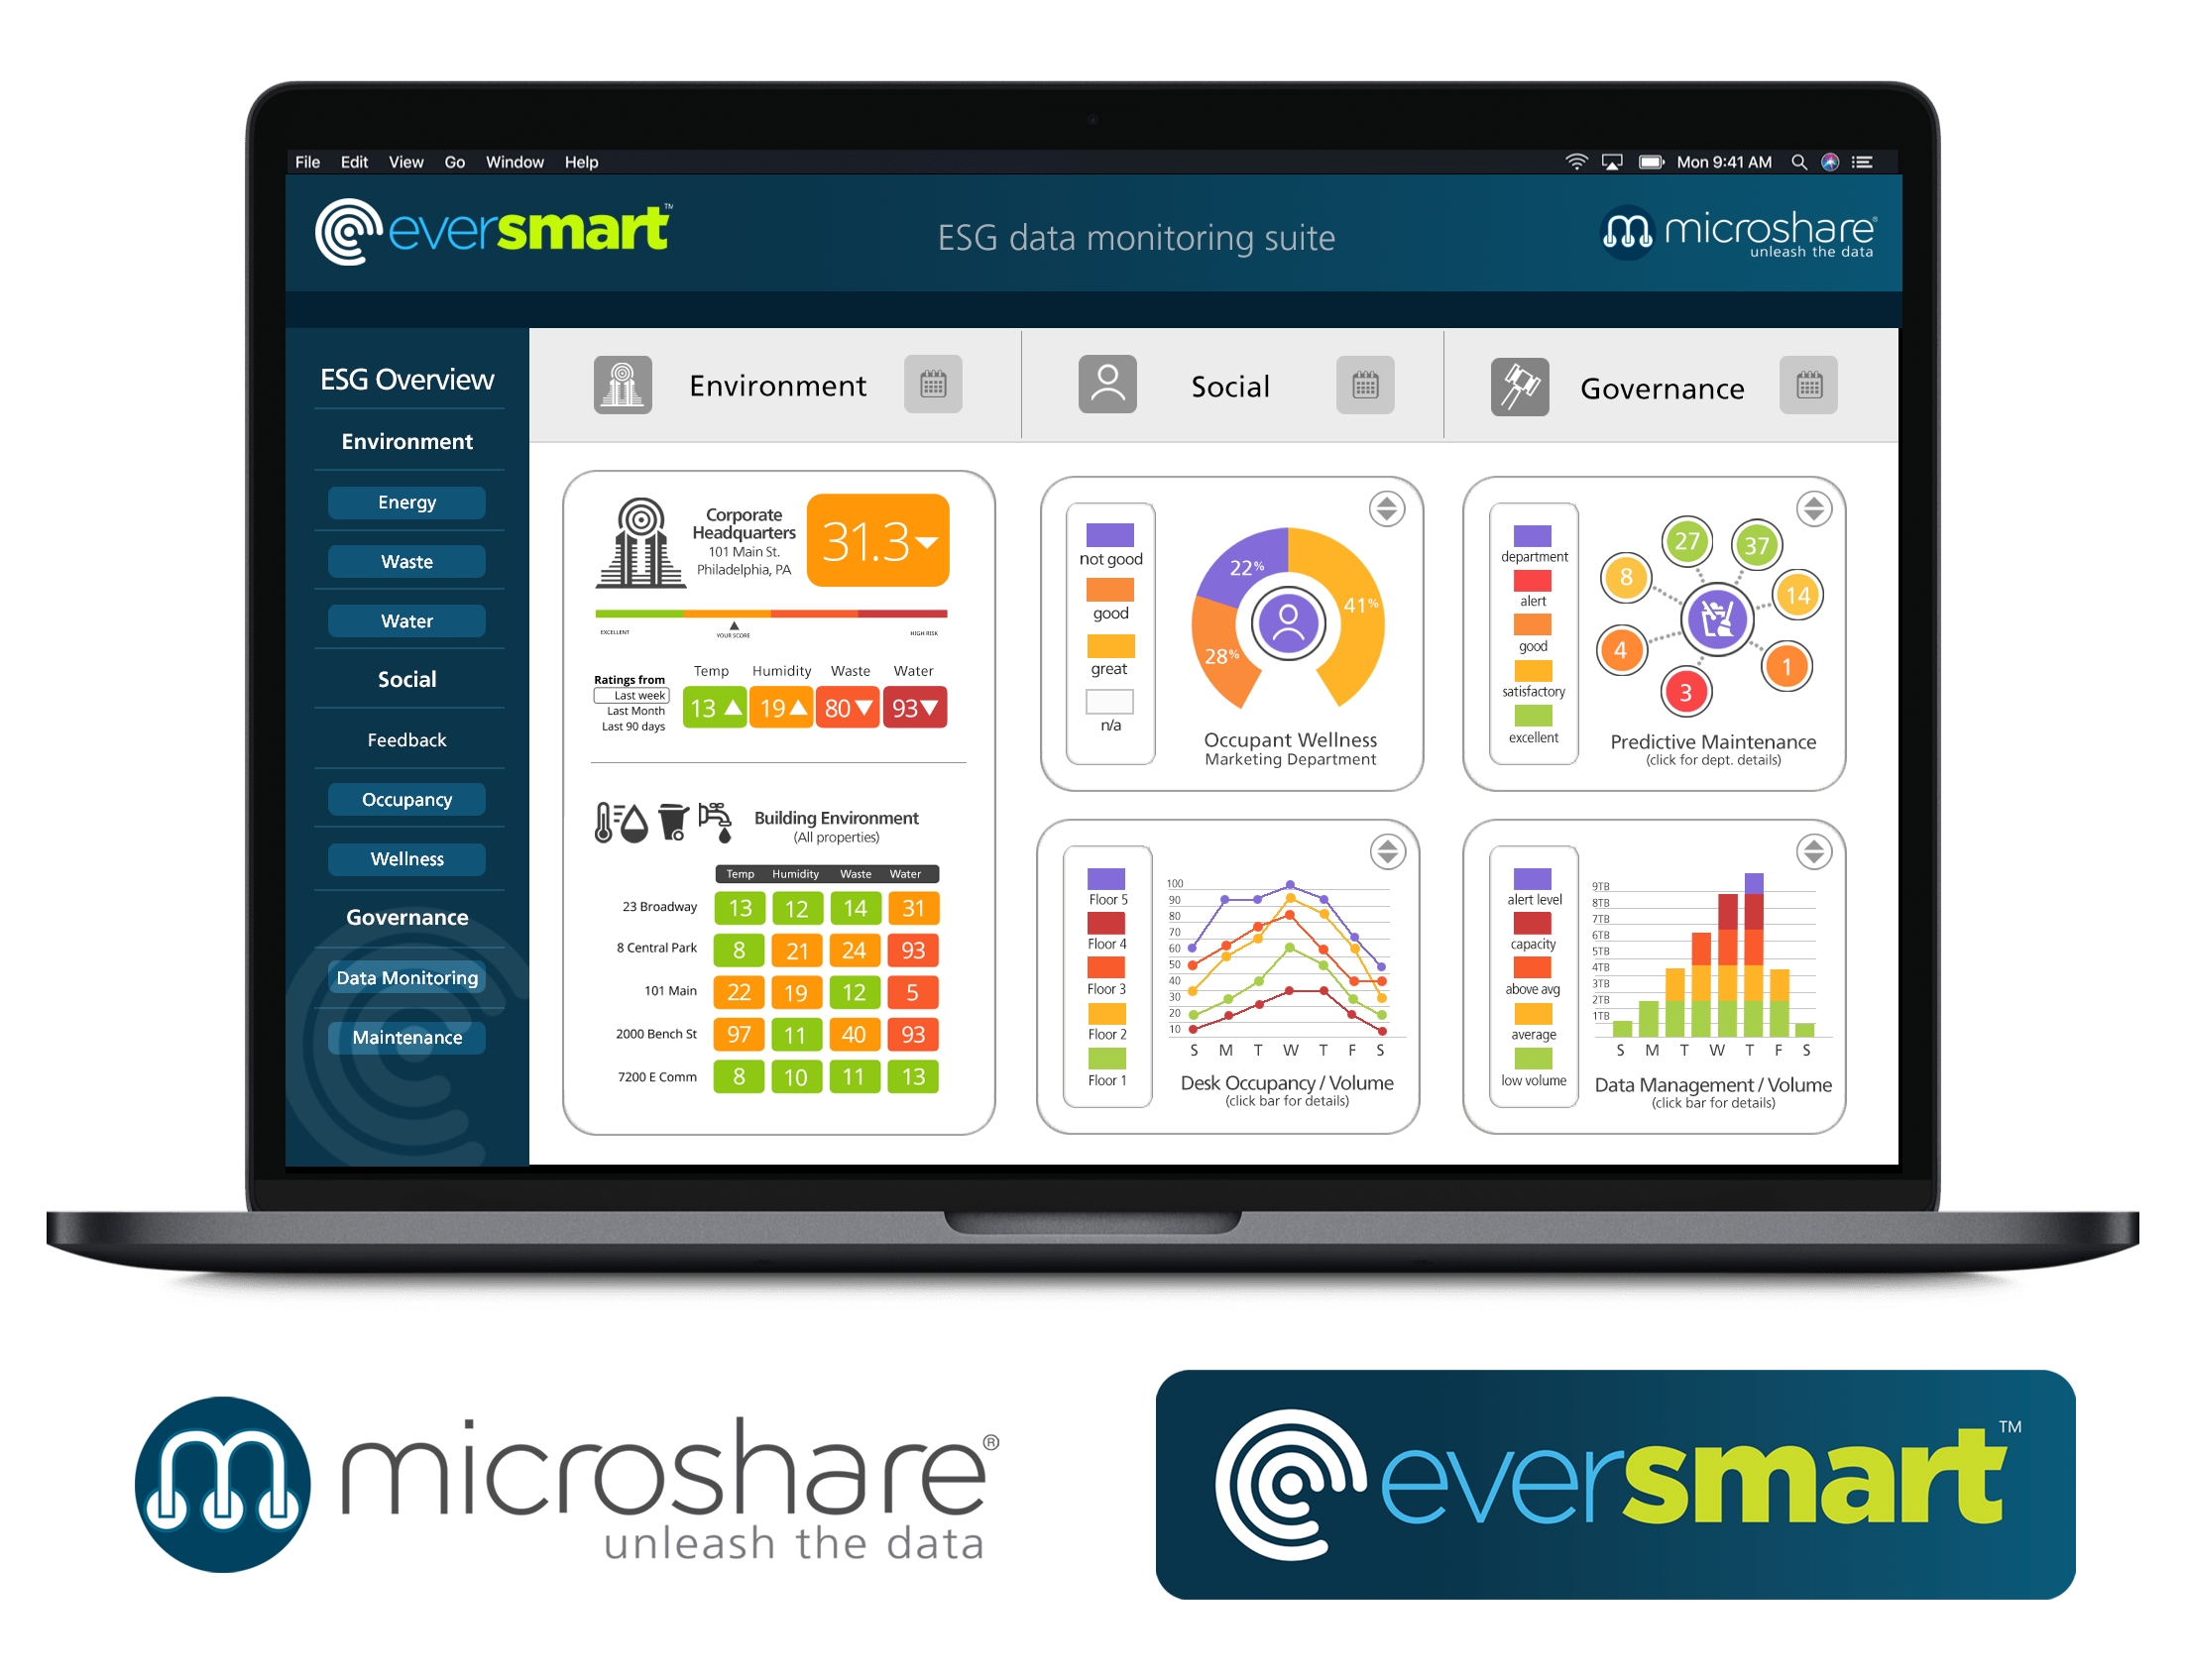 Microshare 為全球一些最大型公司提供智能建設數據解決方案，具有顯著的雙重業績衡量標準：節省成本和可持續性